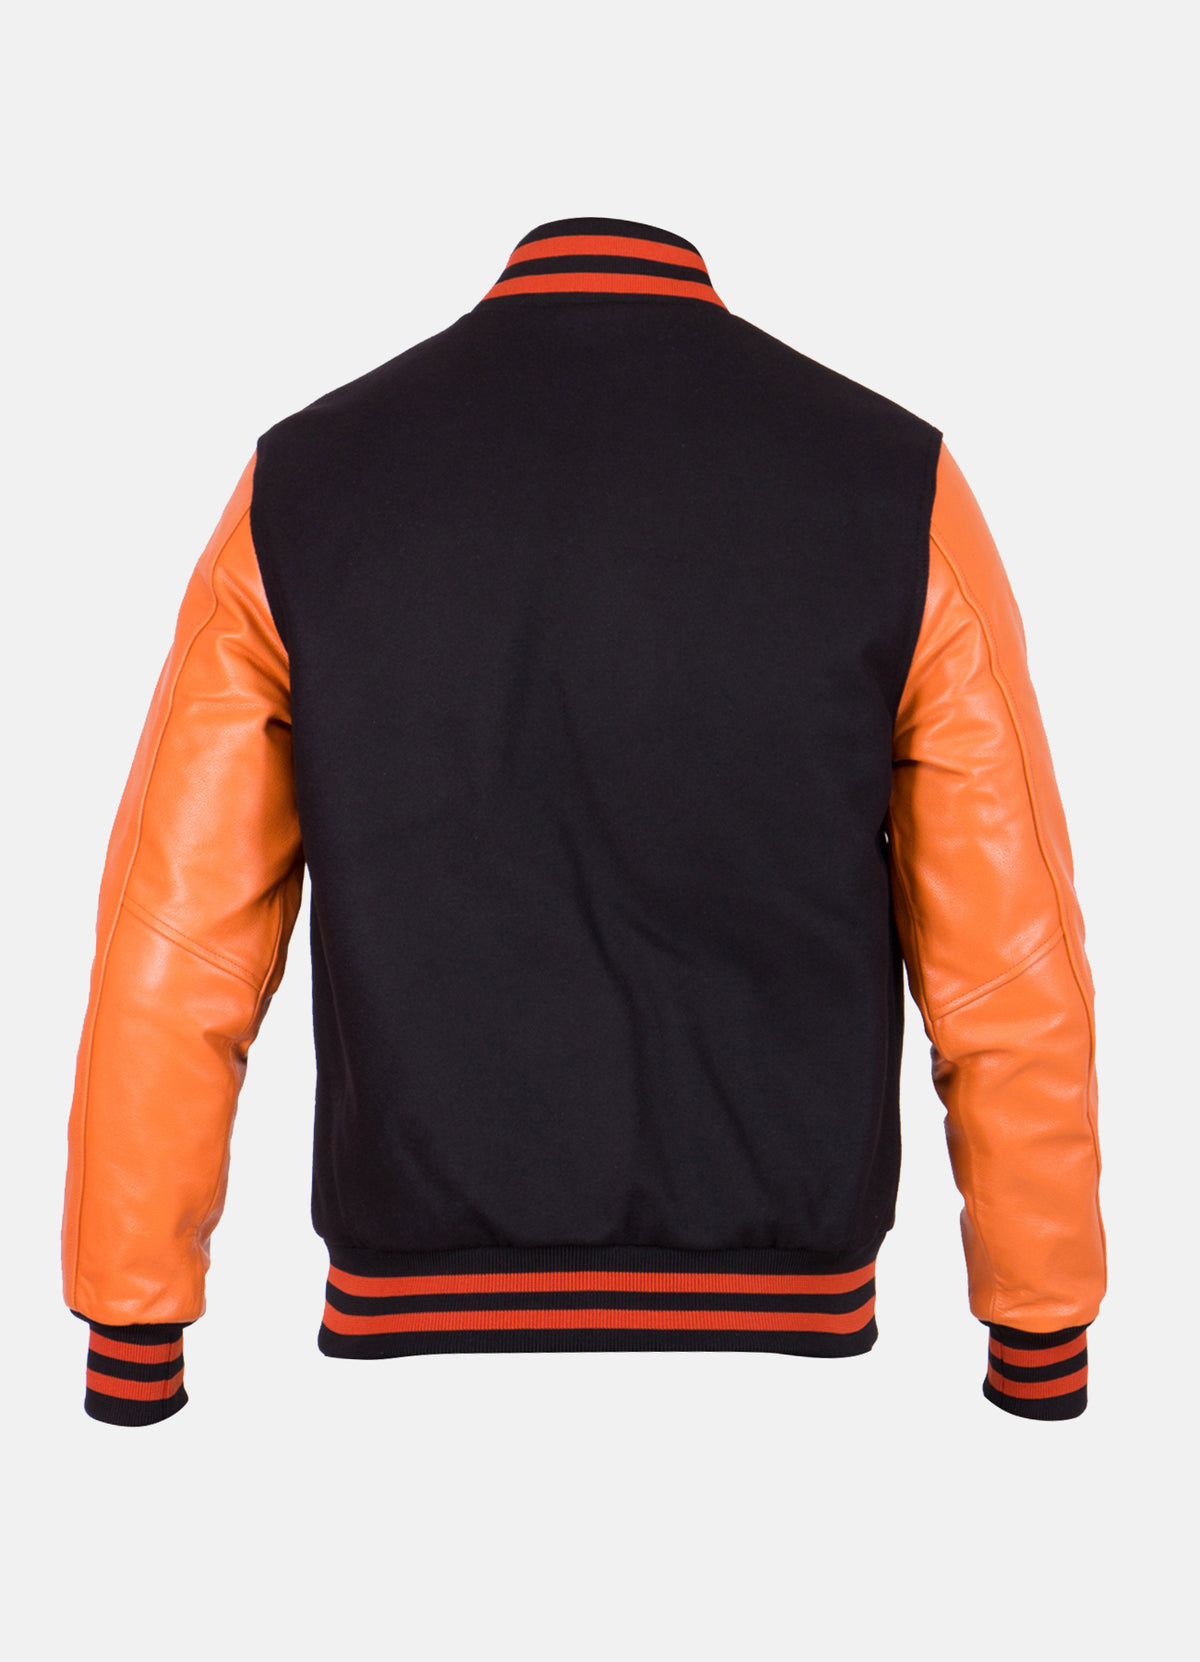 Mens Black and Orange Varsity Jacket | Elite Jacket